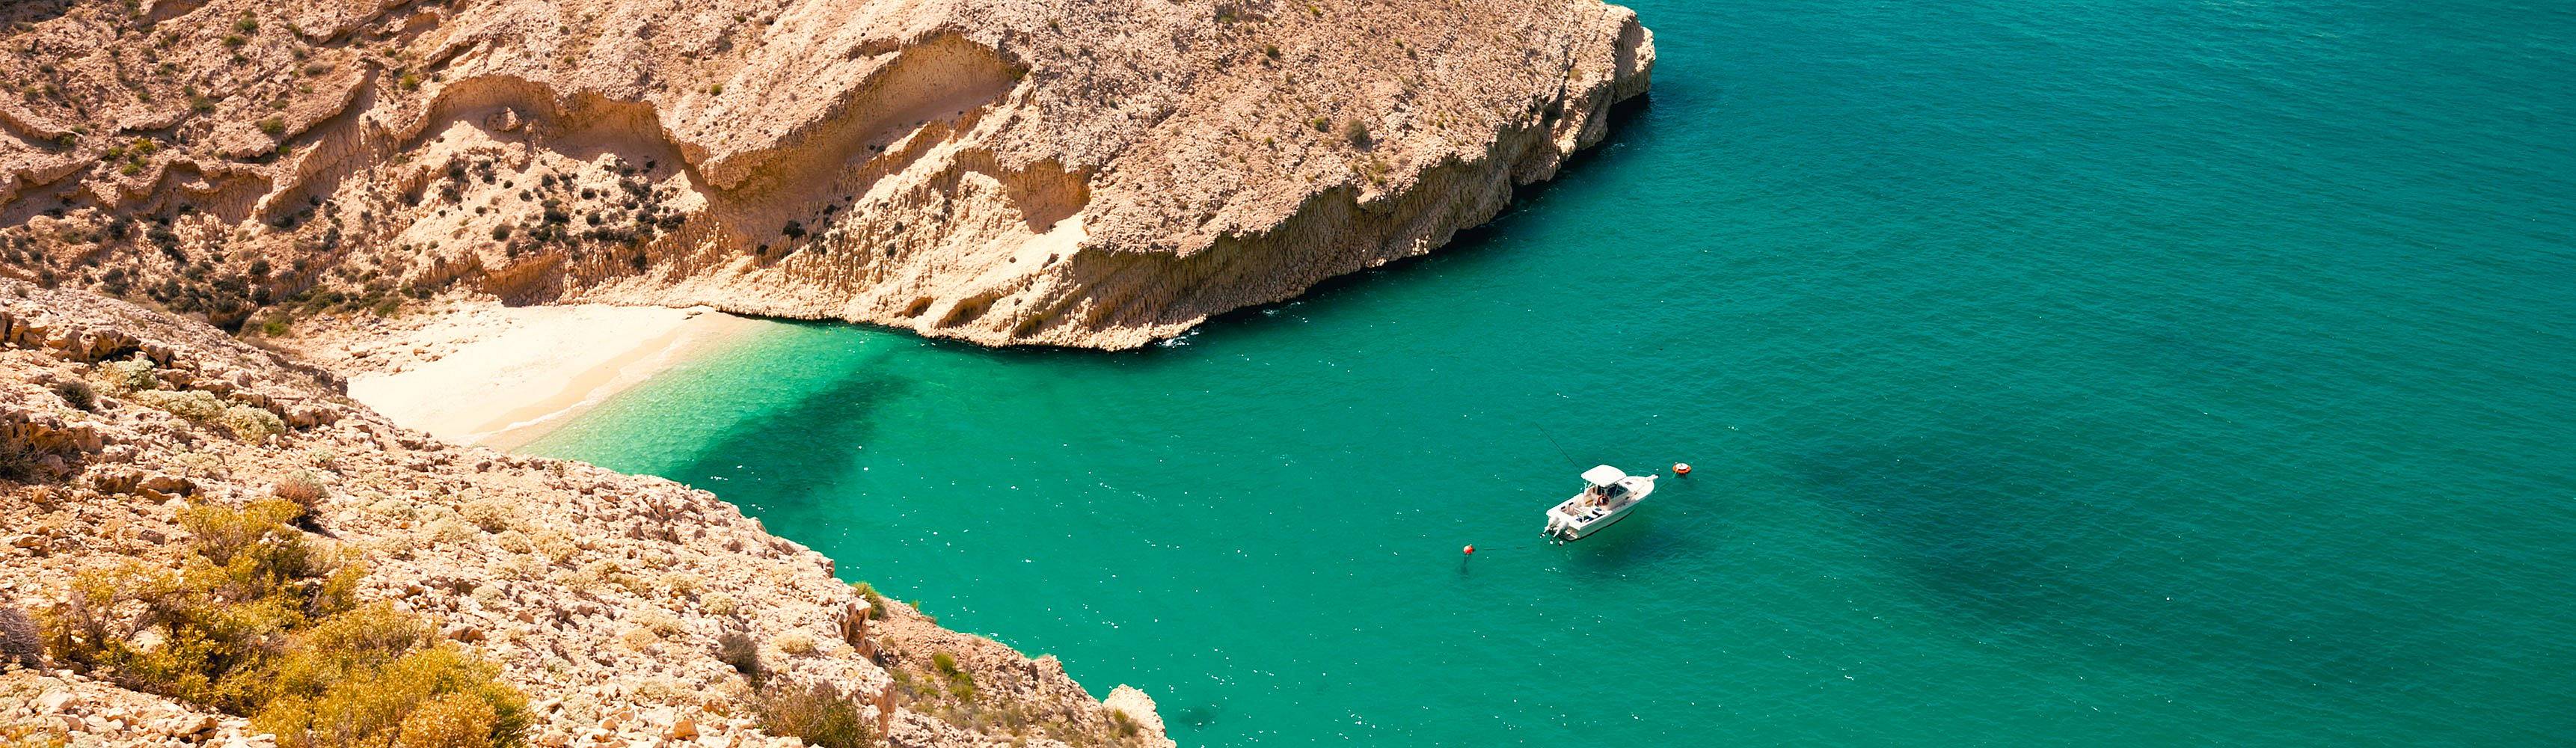 Voyage plage à Oman